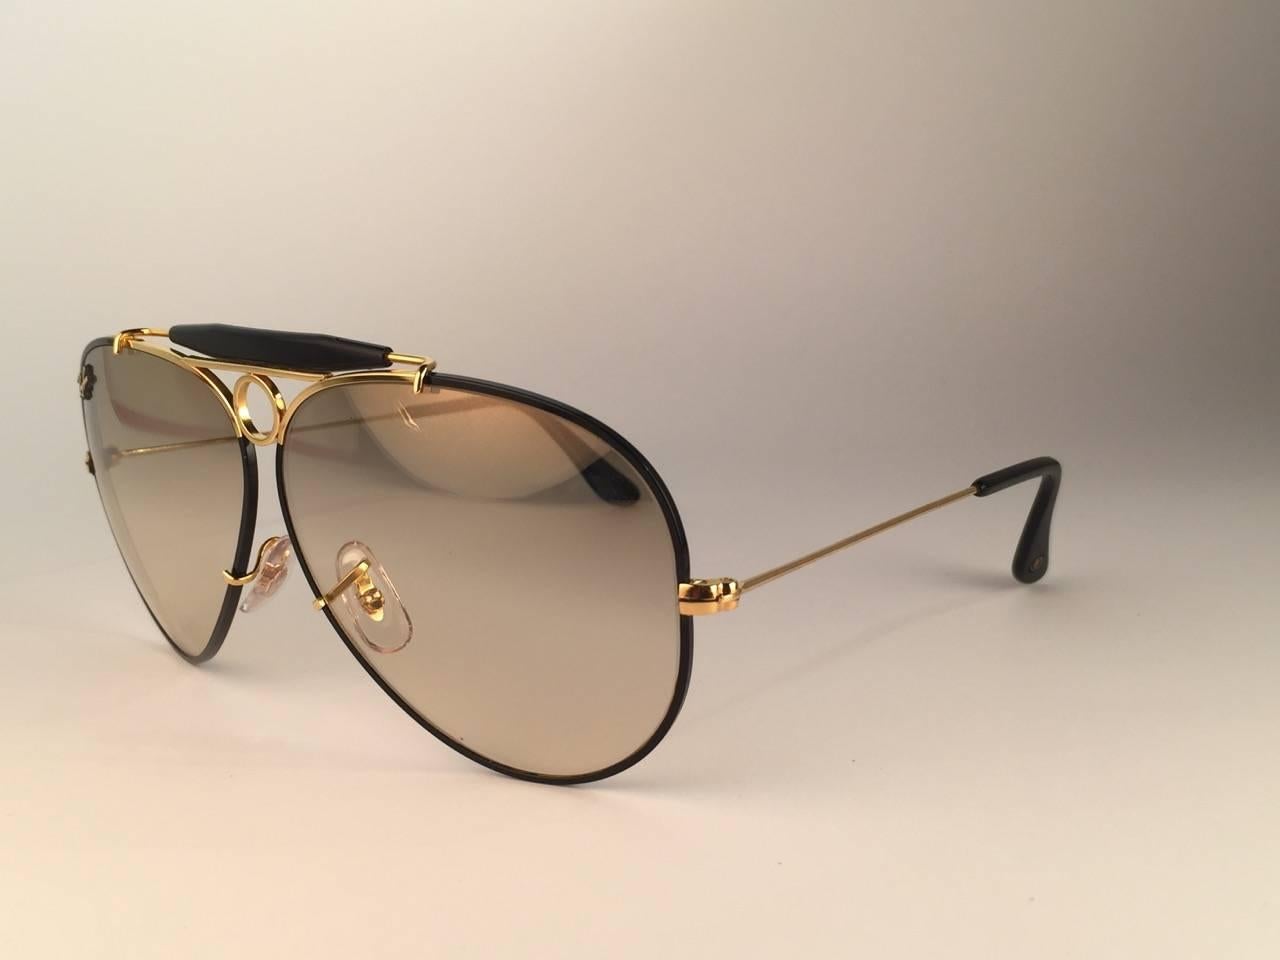 Beige New Ray Ban Precious Metals 24K Gold & Black Shooter 62Mm USA Sunglasses